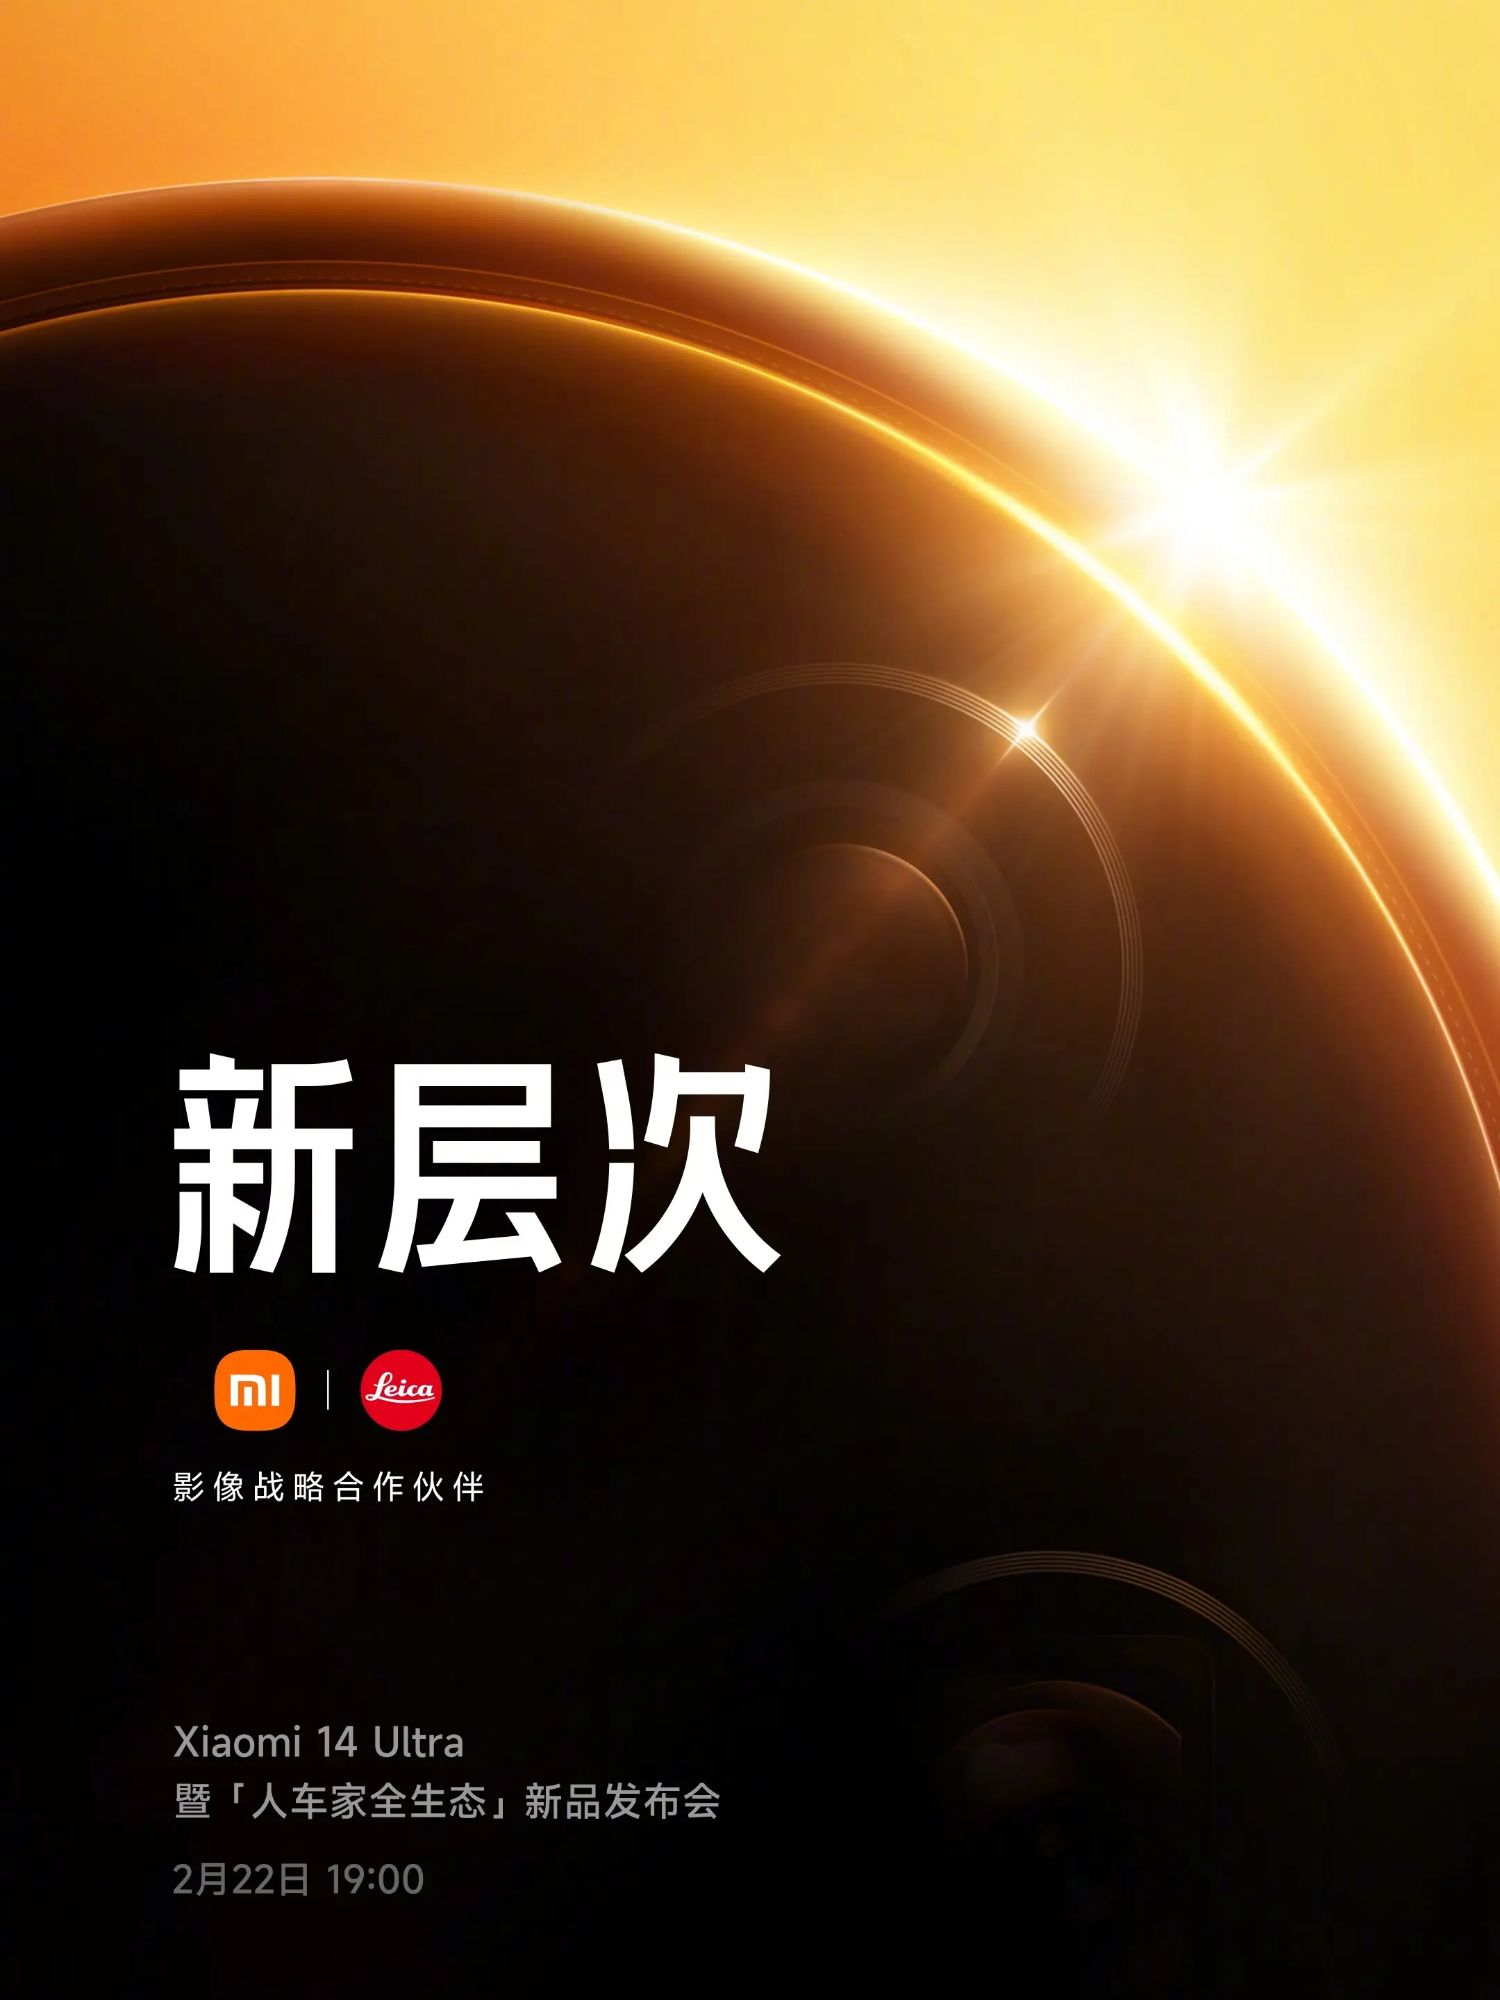 Xiaomi 14 Ultra will debut in China